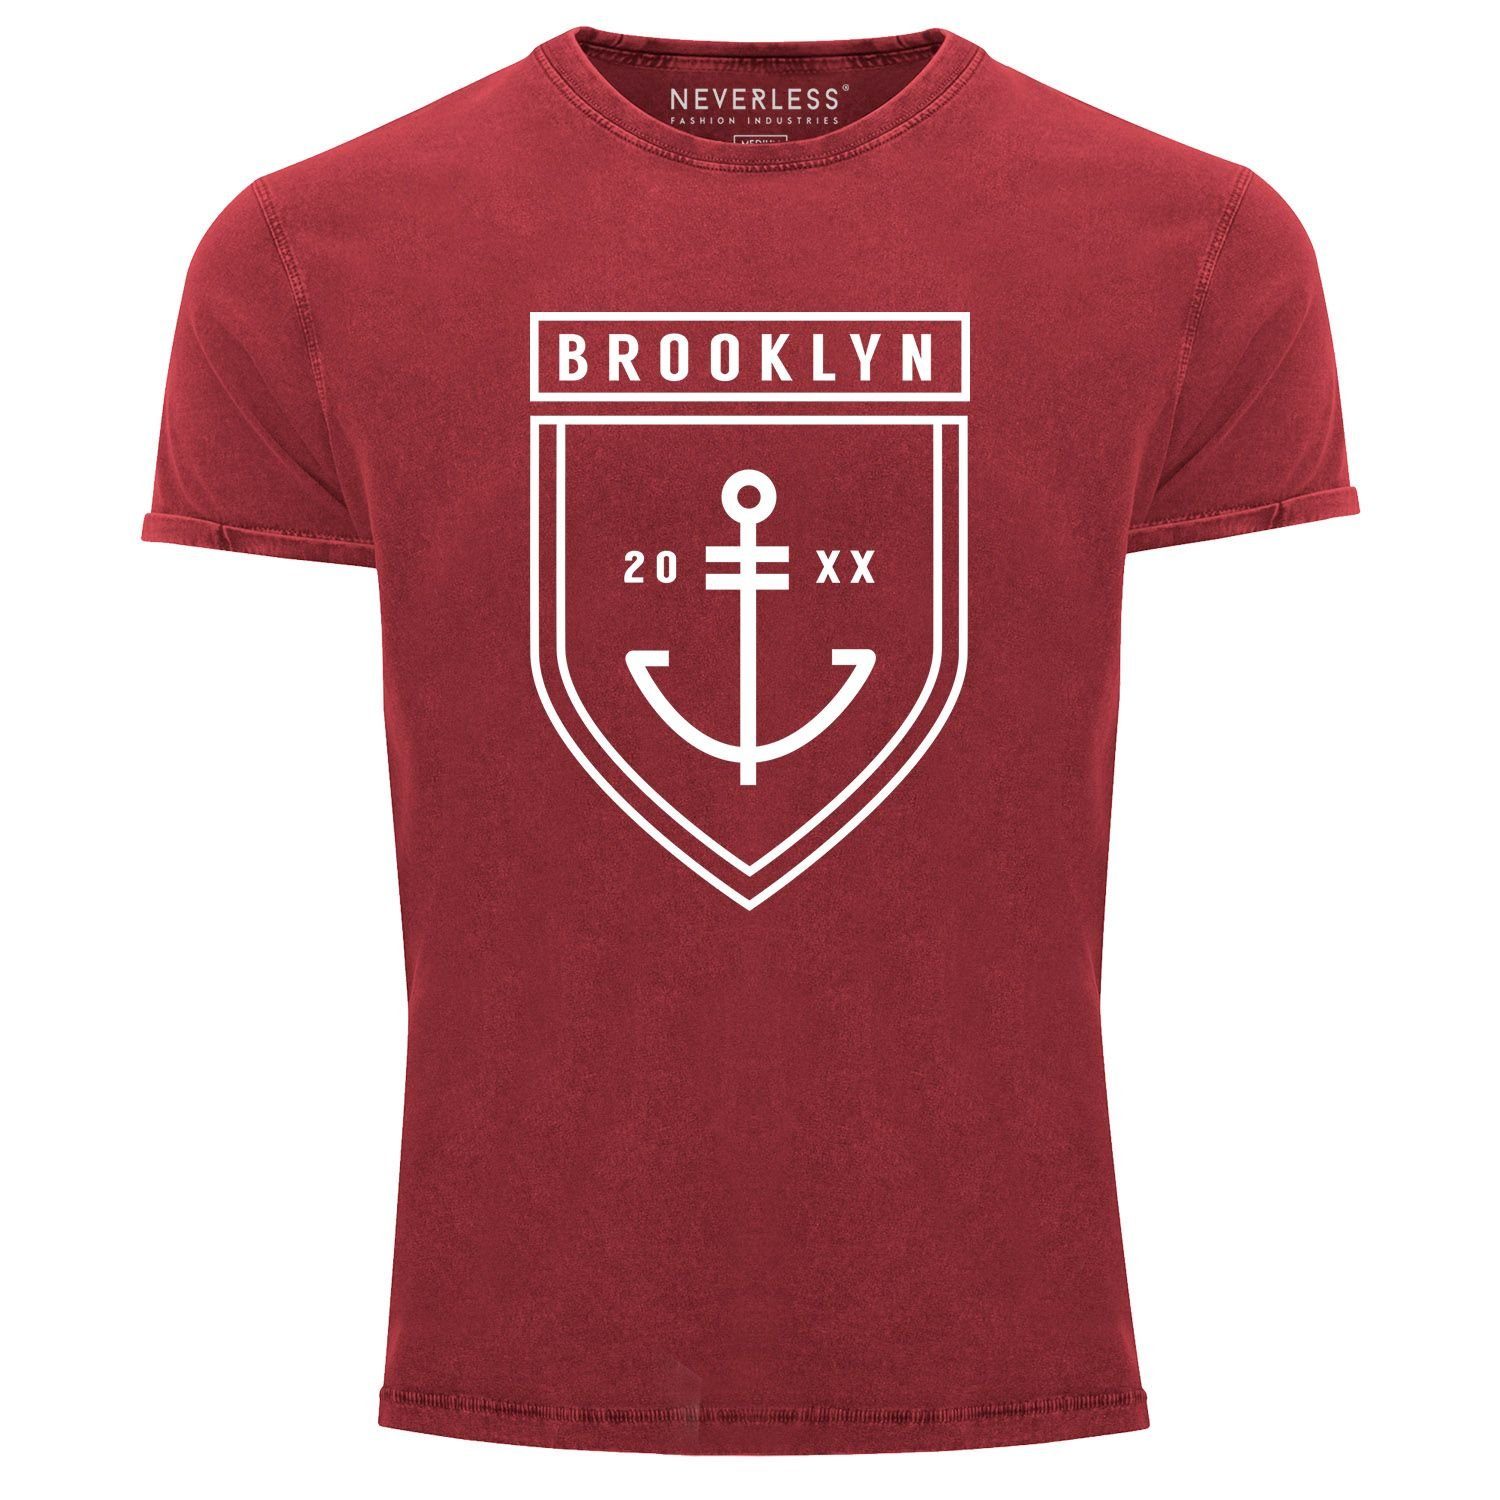 Neverless Print-Shirt Cooles Angesagtes Herren T-Shirt Vintage Shirt Brooklyn Anker Aufdruck Used Look Slim Fit Neverless® mit Print rot